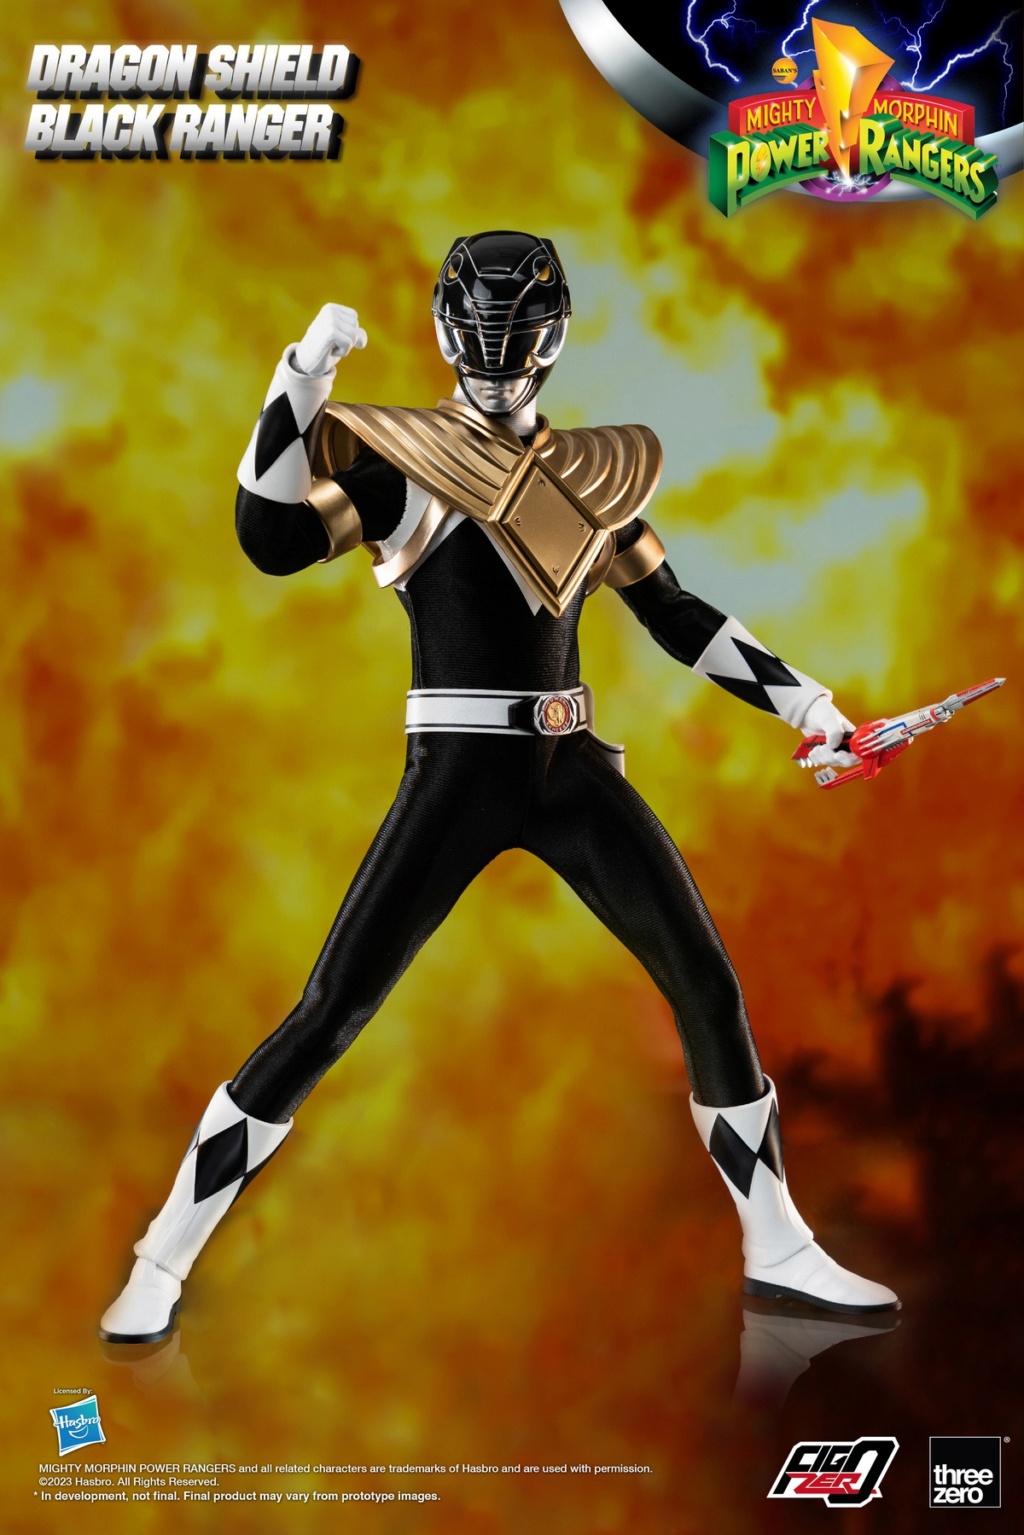 BlackRanger - NEW PRODUCT: Threezero: Mighty Morphin Power Rangers: FigZero 1/6 Dragon Shield Black Ranger 12570110